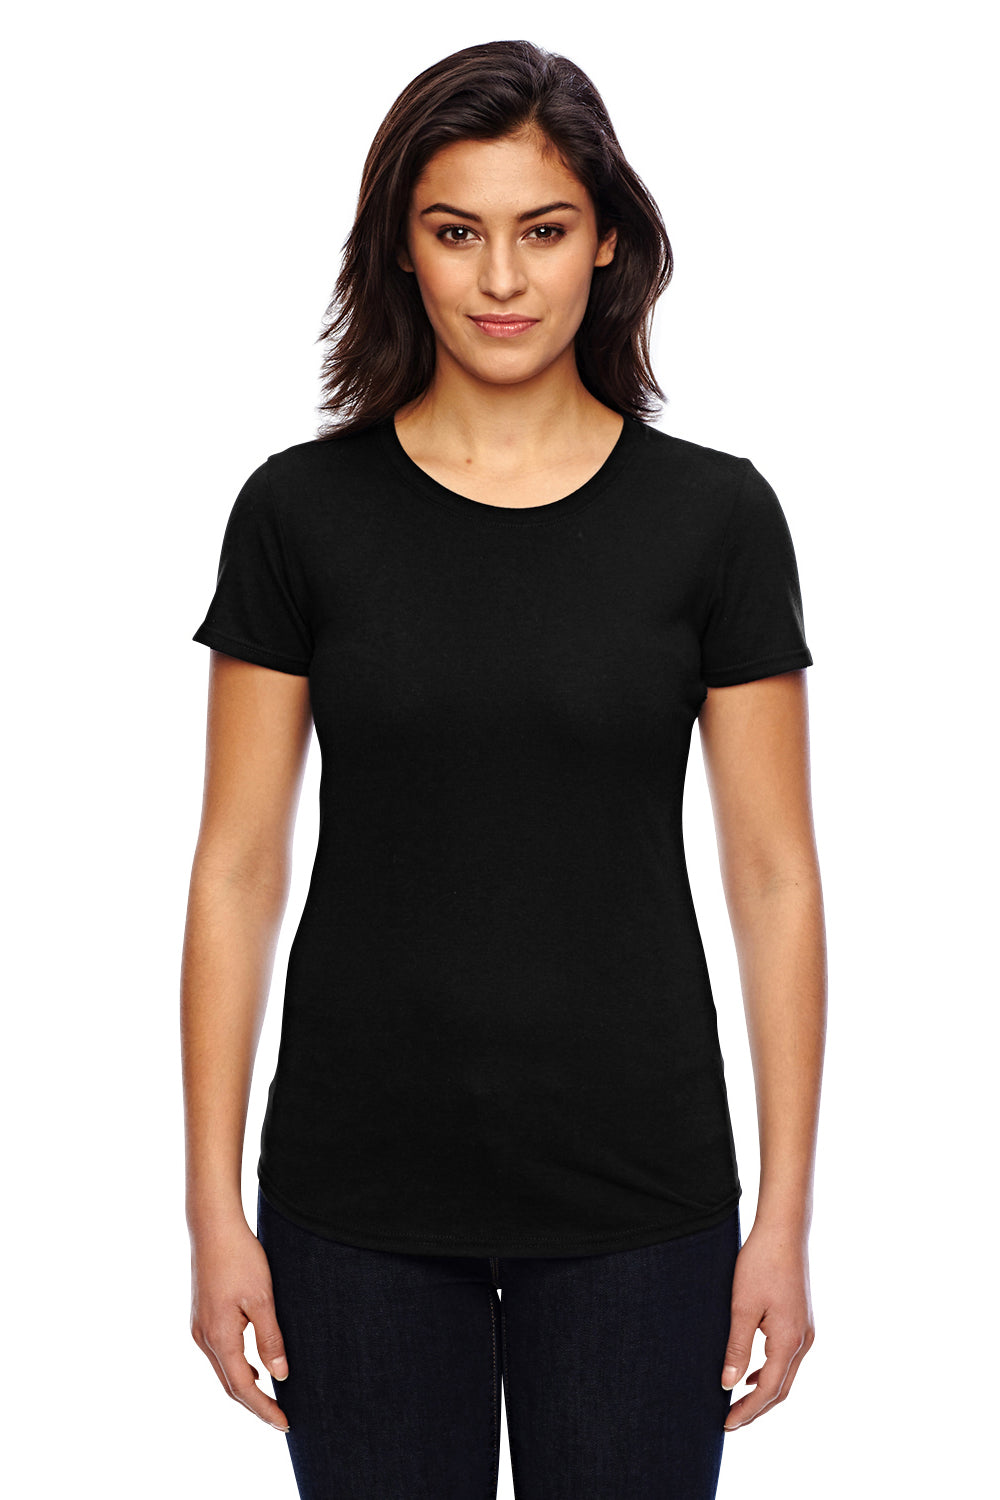 Anvil 6750L Womens Short Sleeve Crewneck T-Shirt Black Front